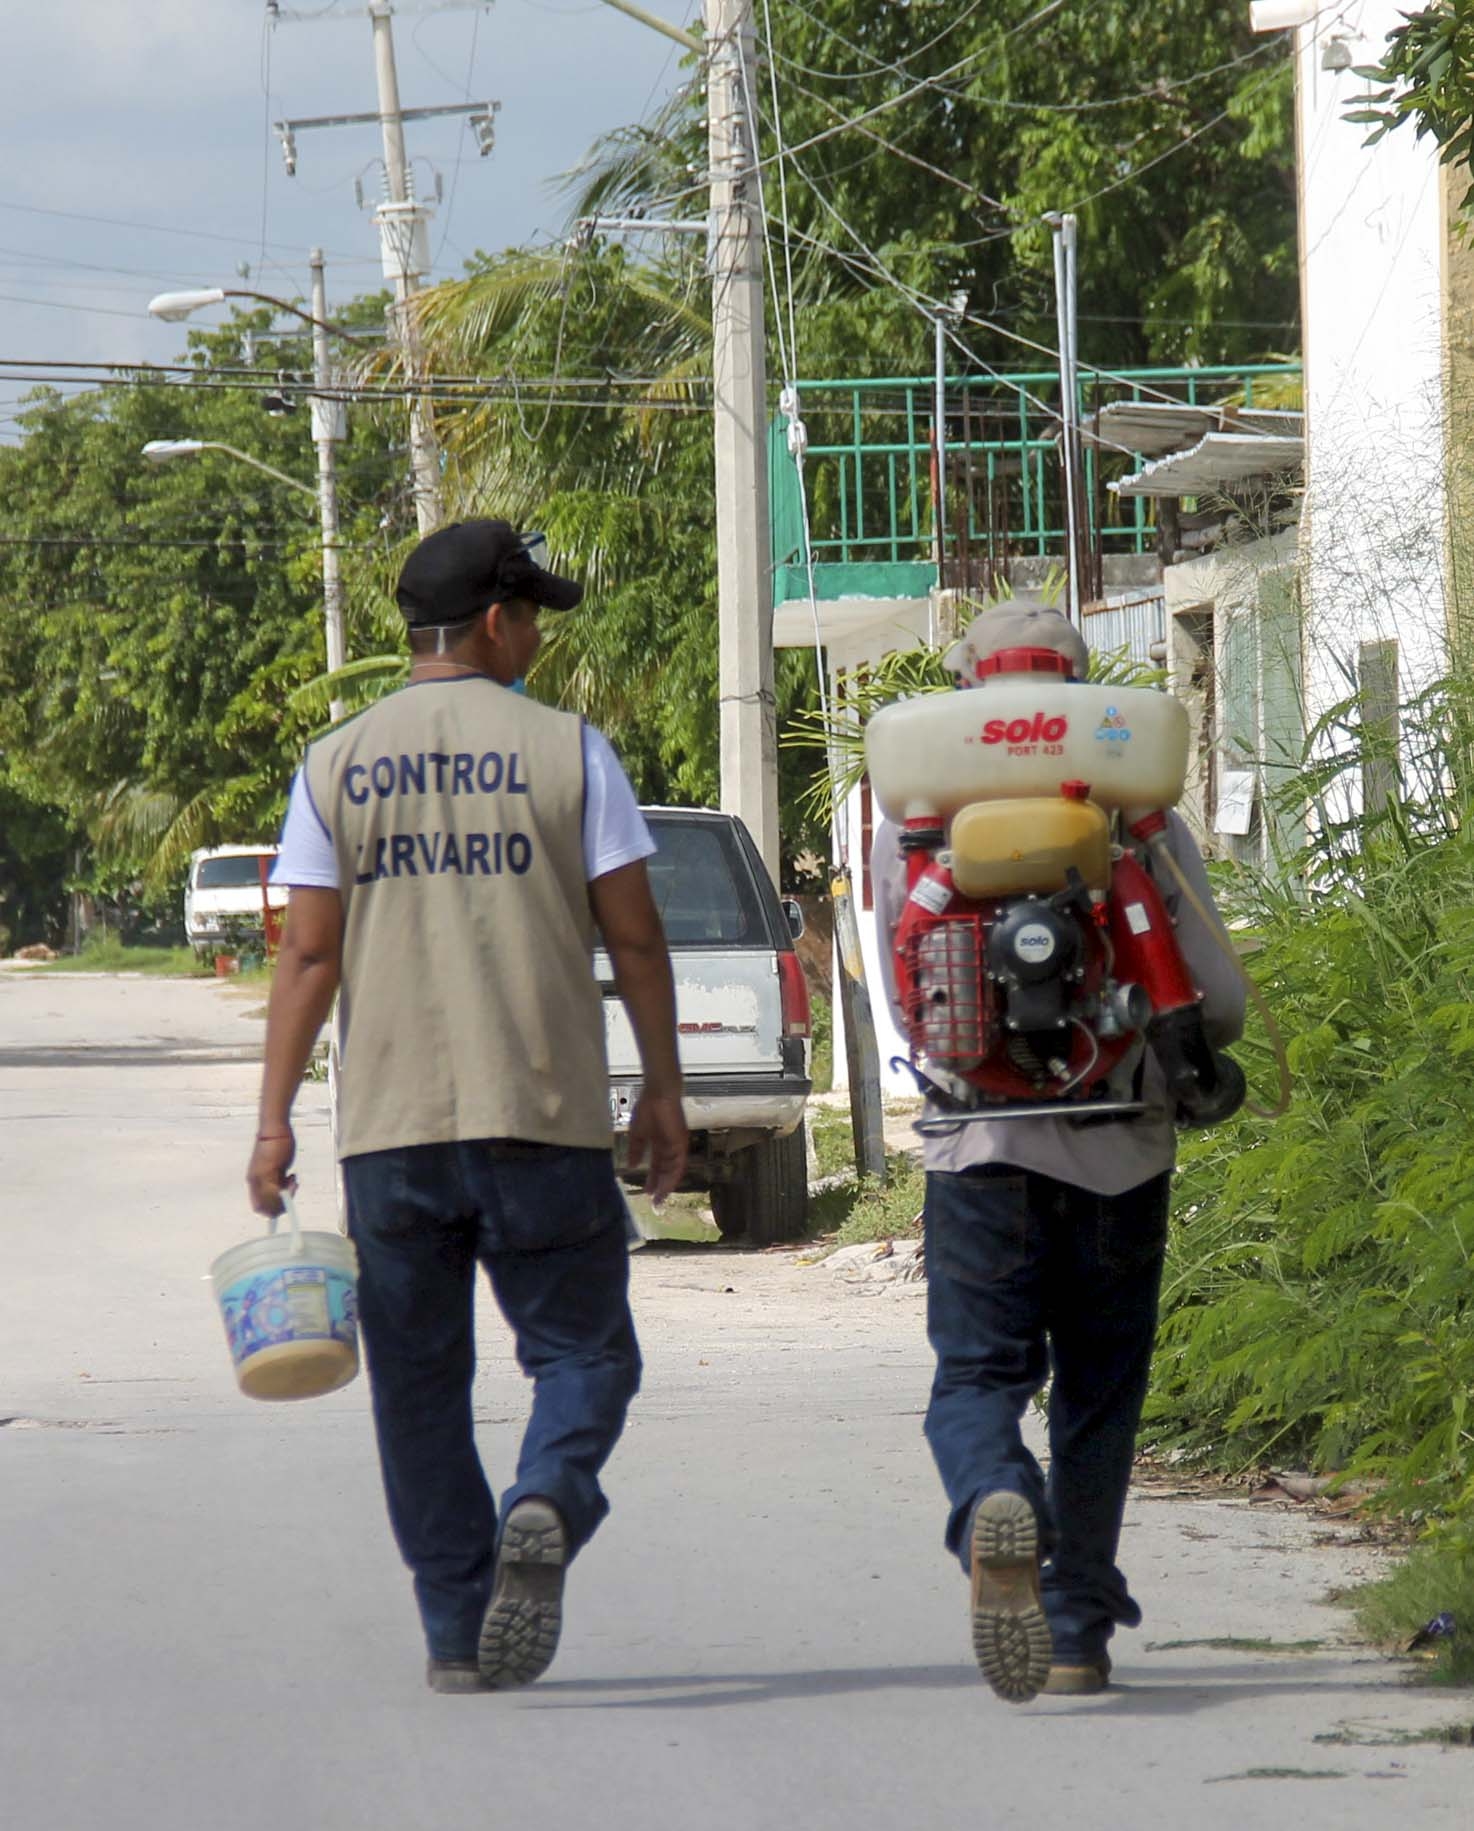 Quintana Roo segundo lugar nacional en contagios de viruela símica desde el 2022, con 236 casos